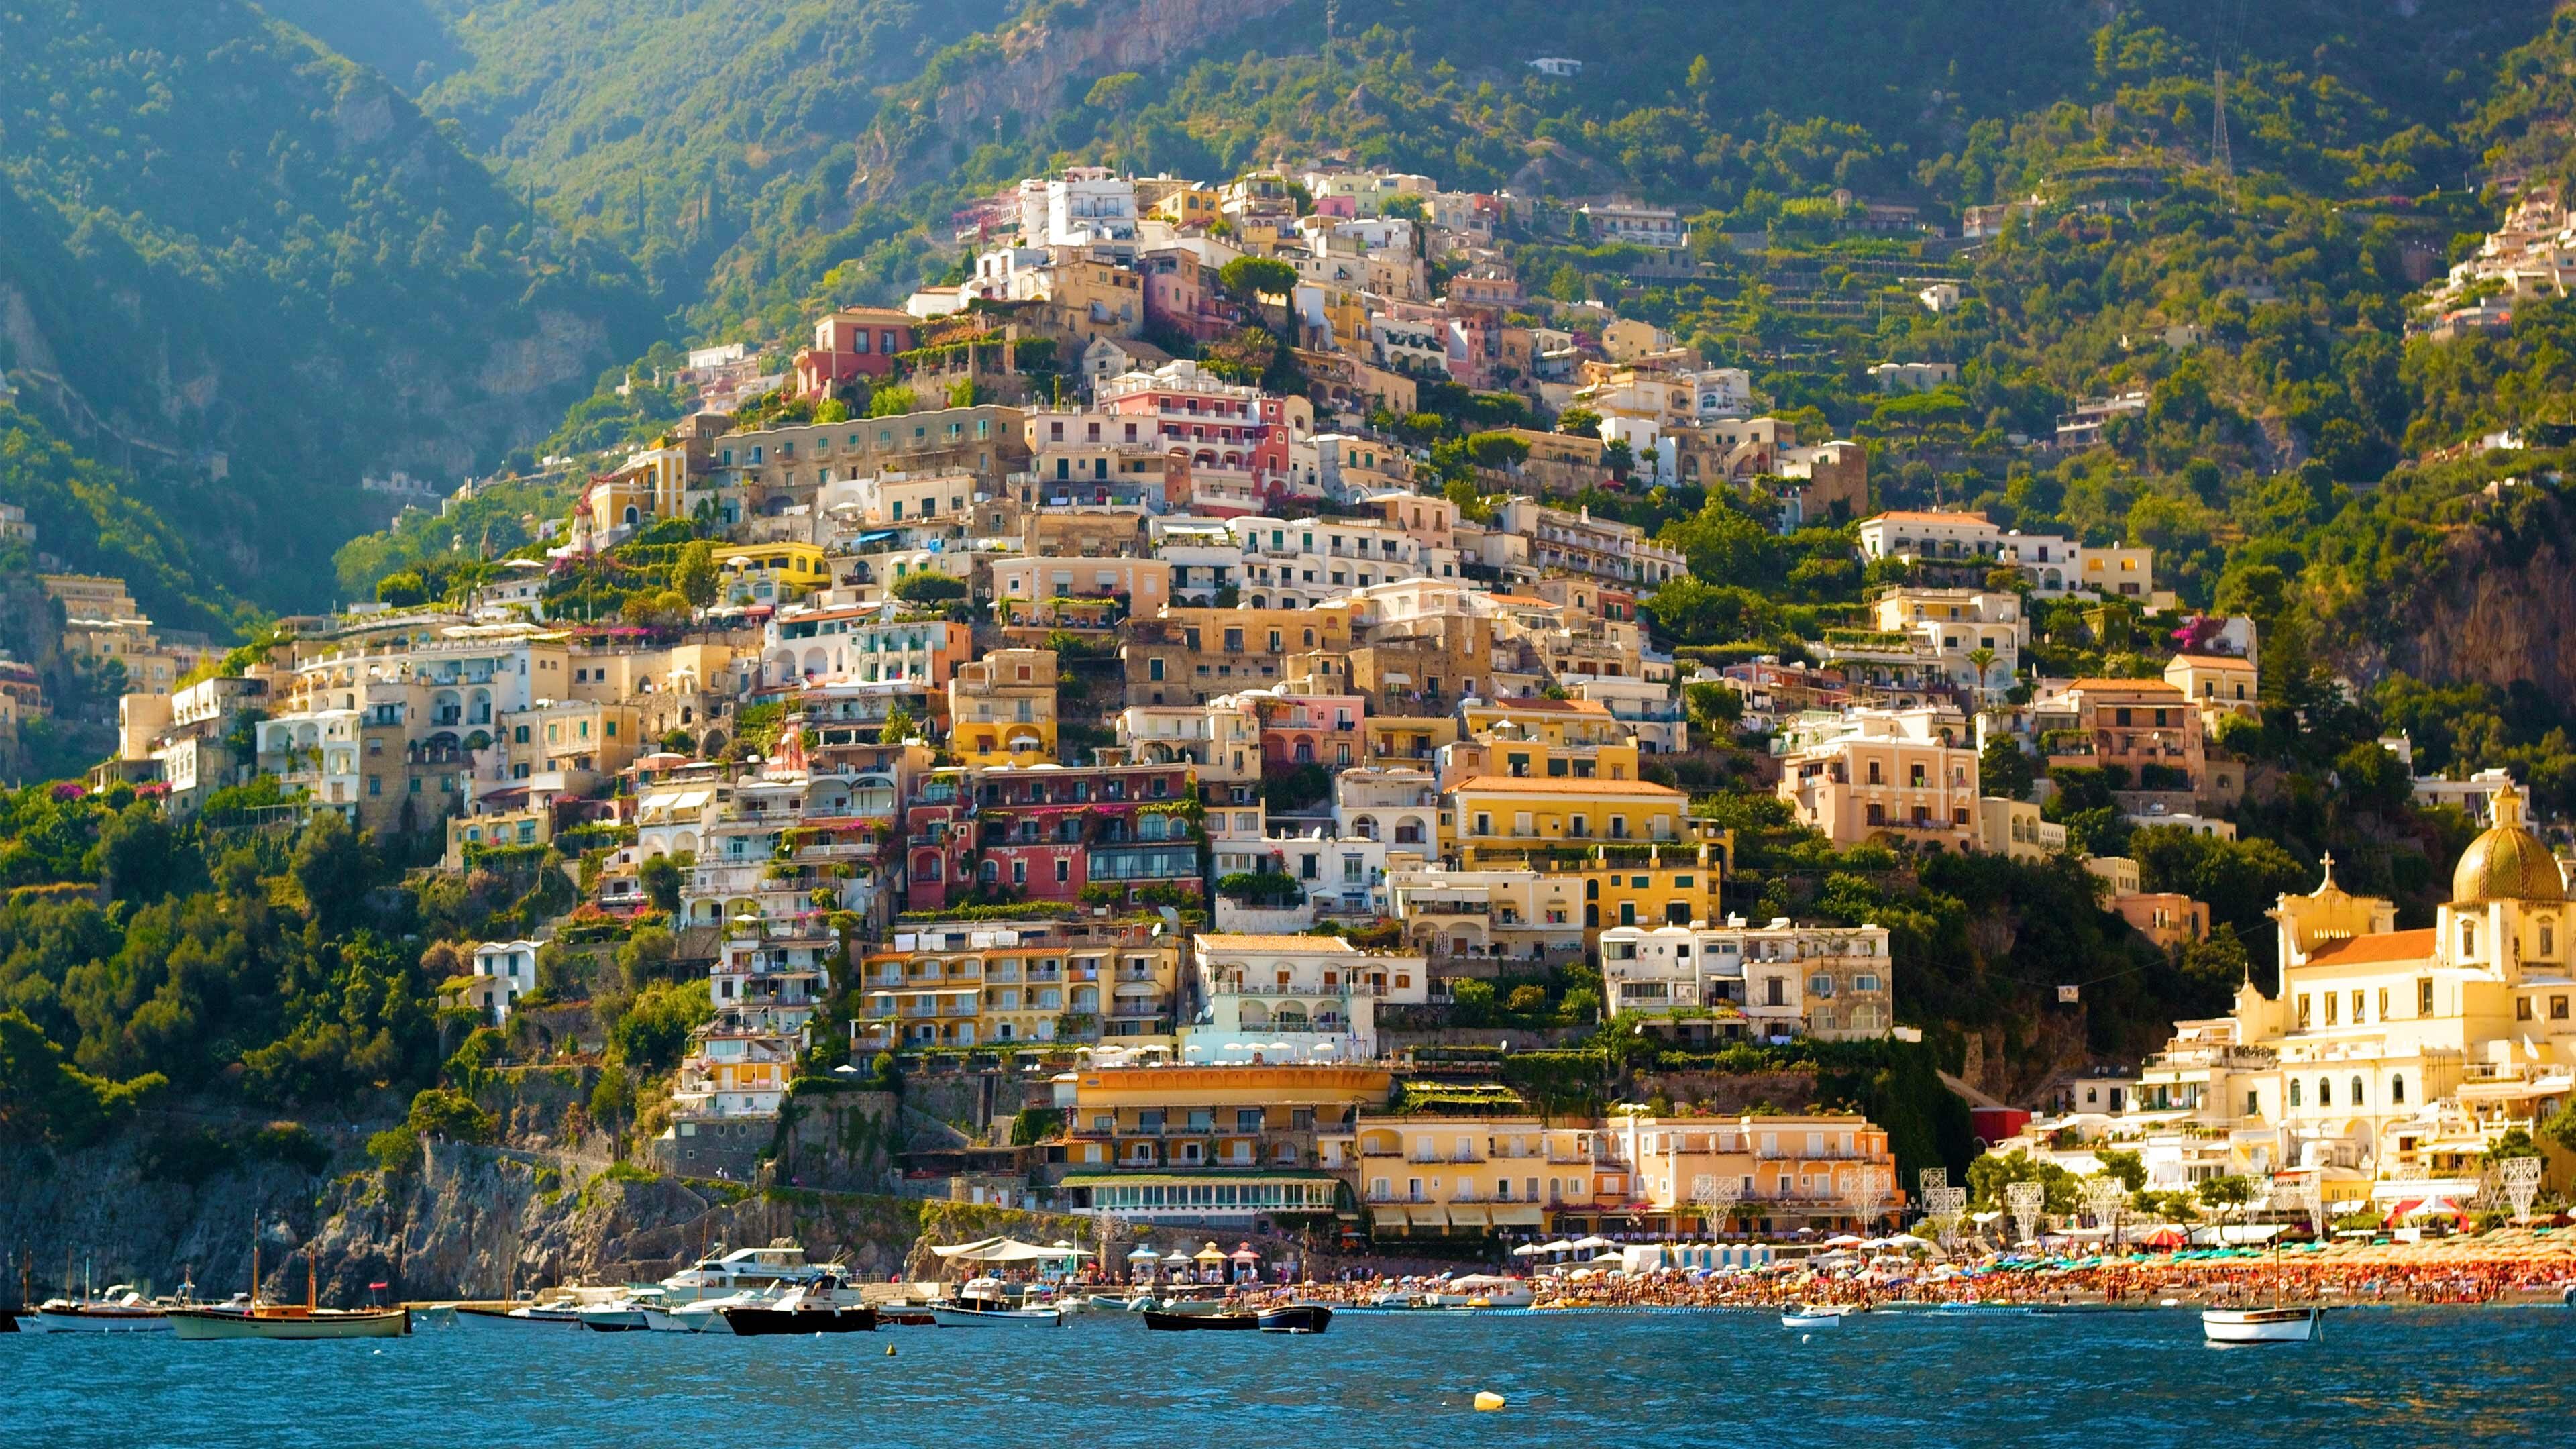 Amalfi coast. Побережье Амальфи Италия. Италия Амальфитанское побережье Позитано. Амальфи Позитано Италия. Амальфийское побережье (Amalfi Coast), Италия.